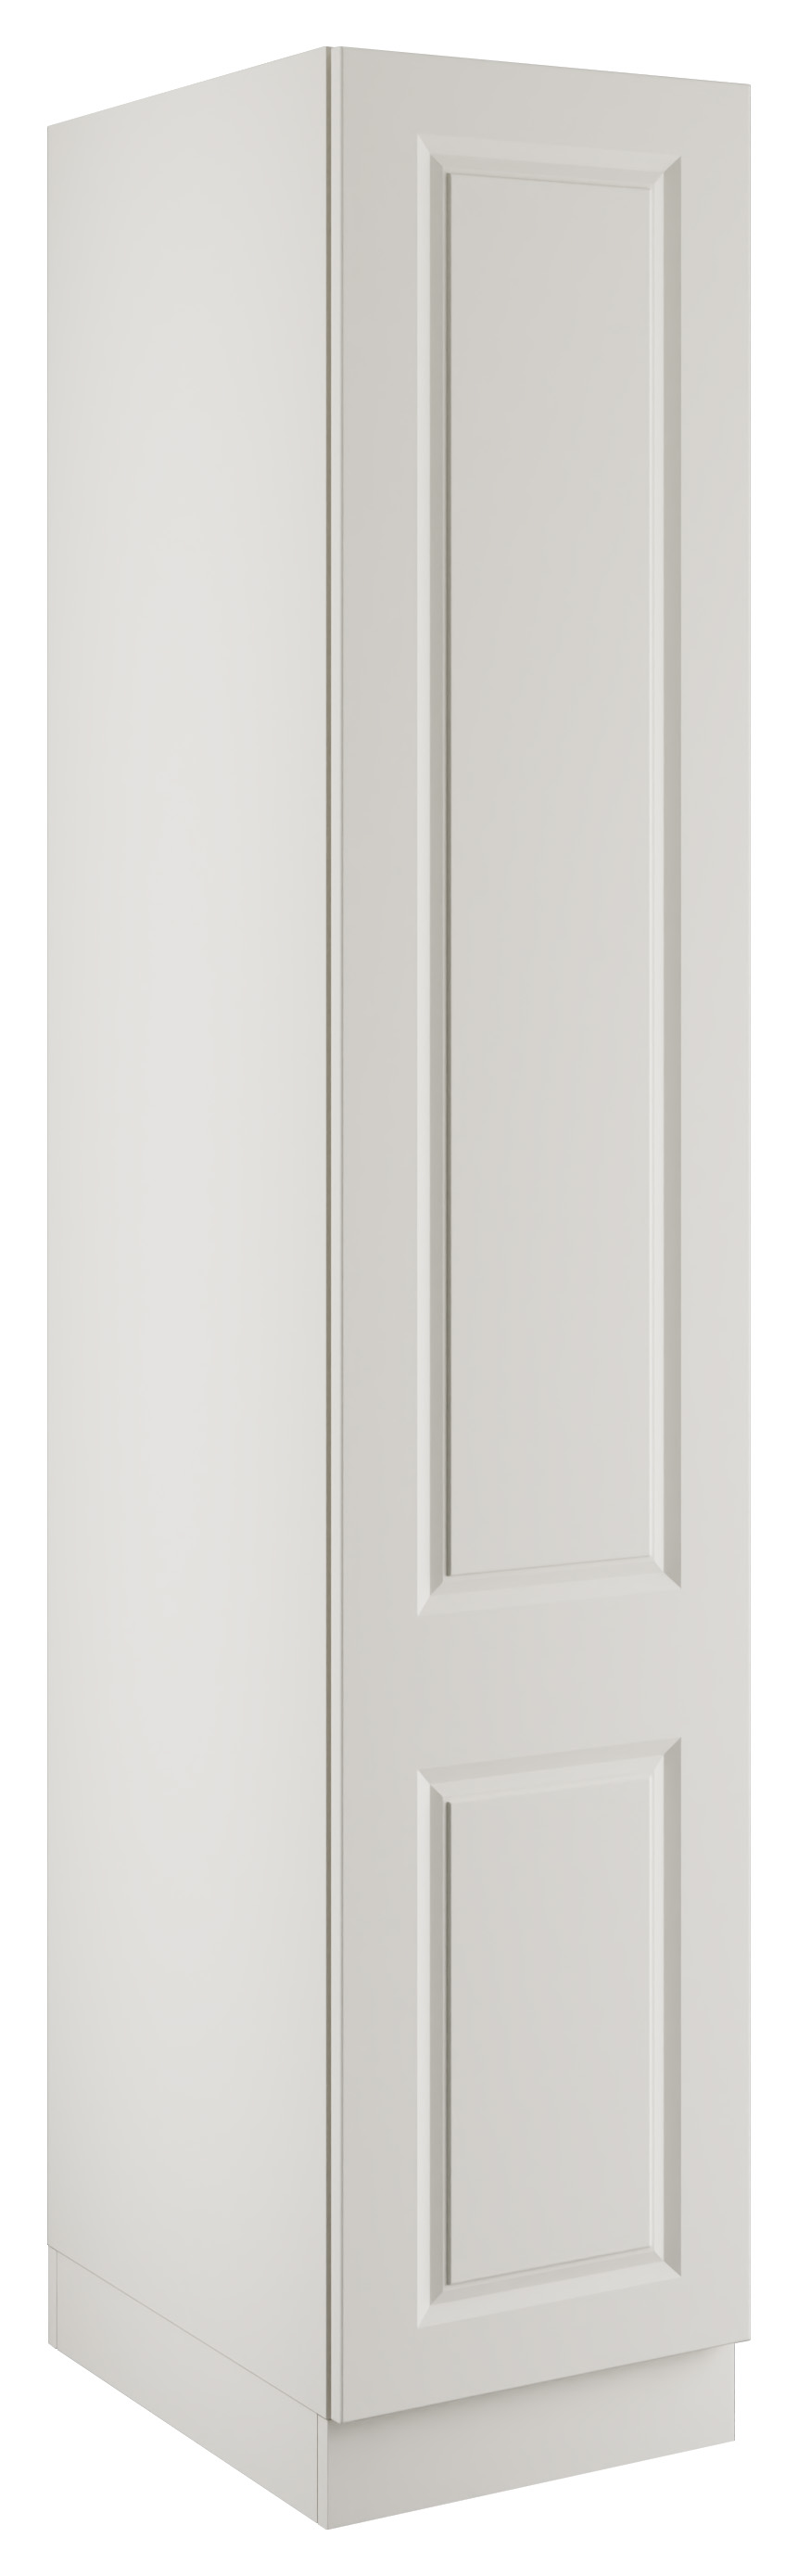 Harrogate White Single Wardrobe with Shelves - 450 x 2260 x 608mm